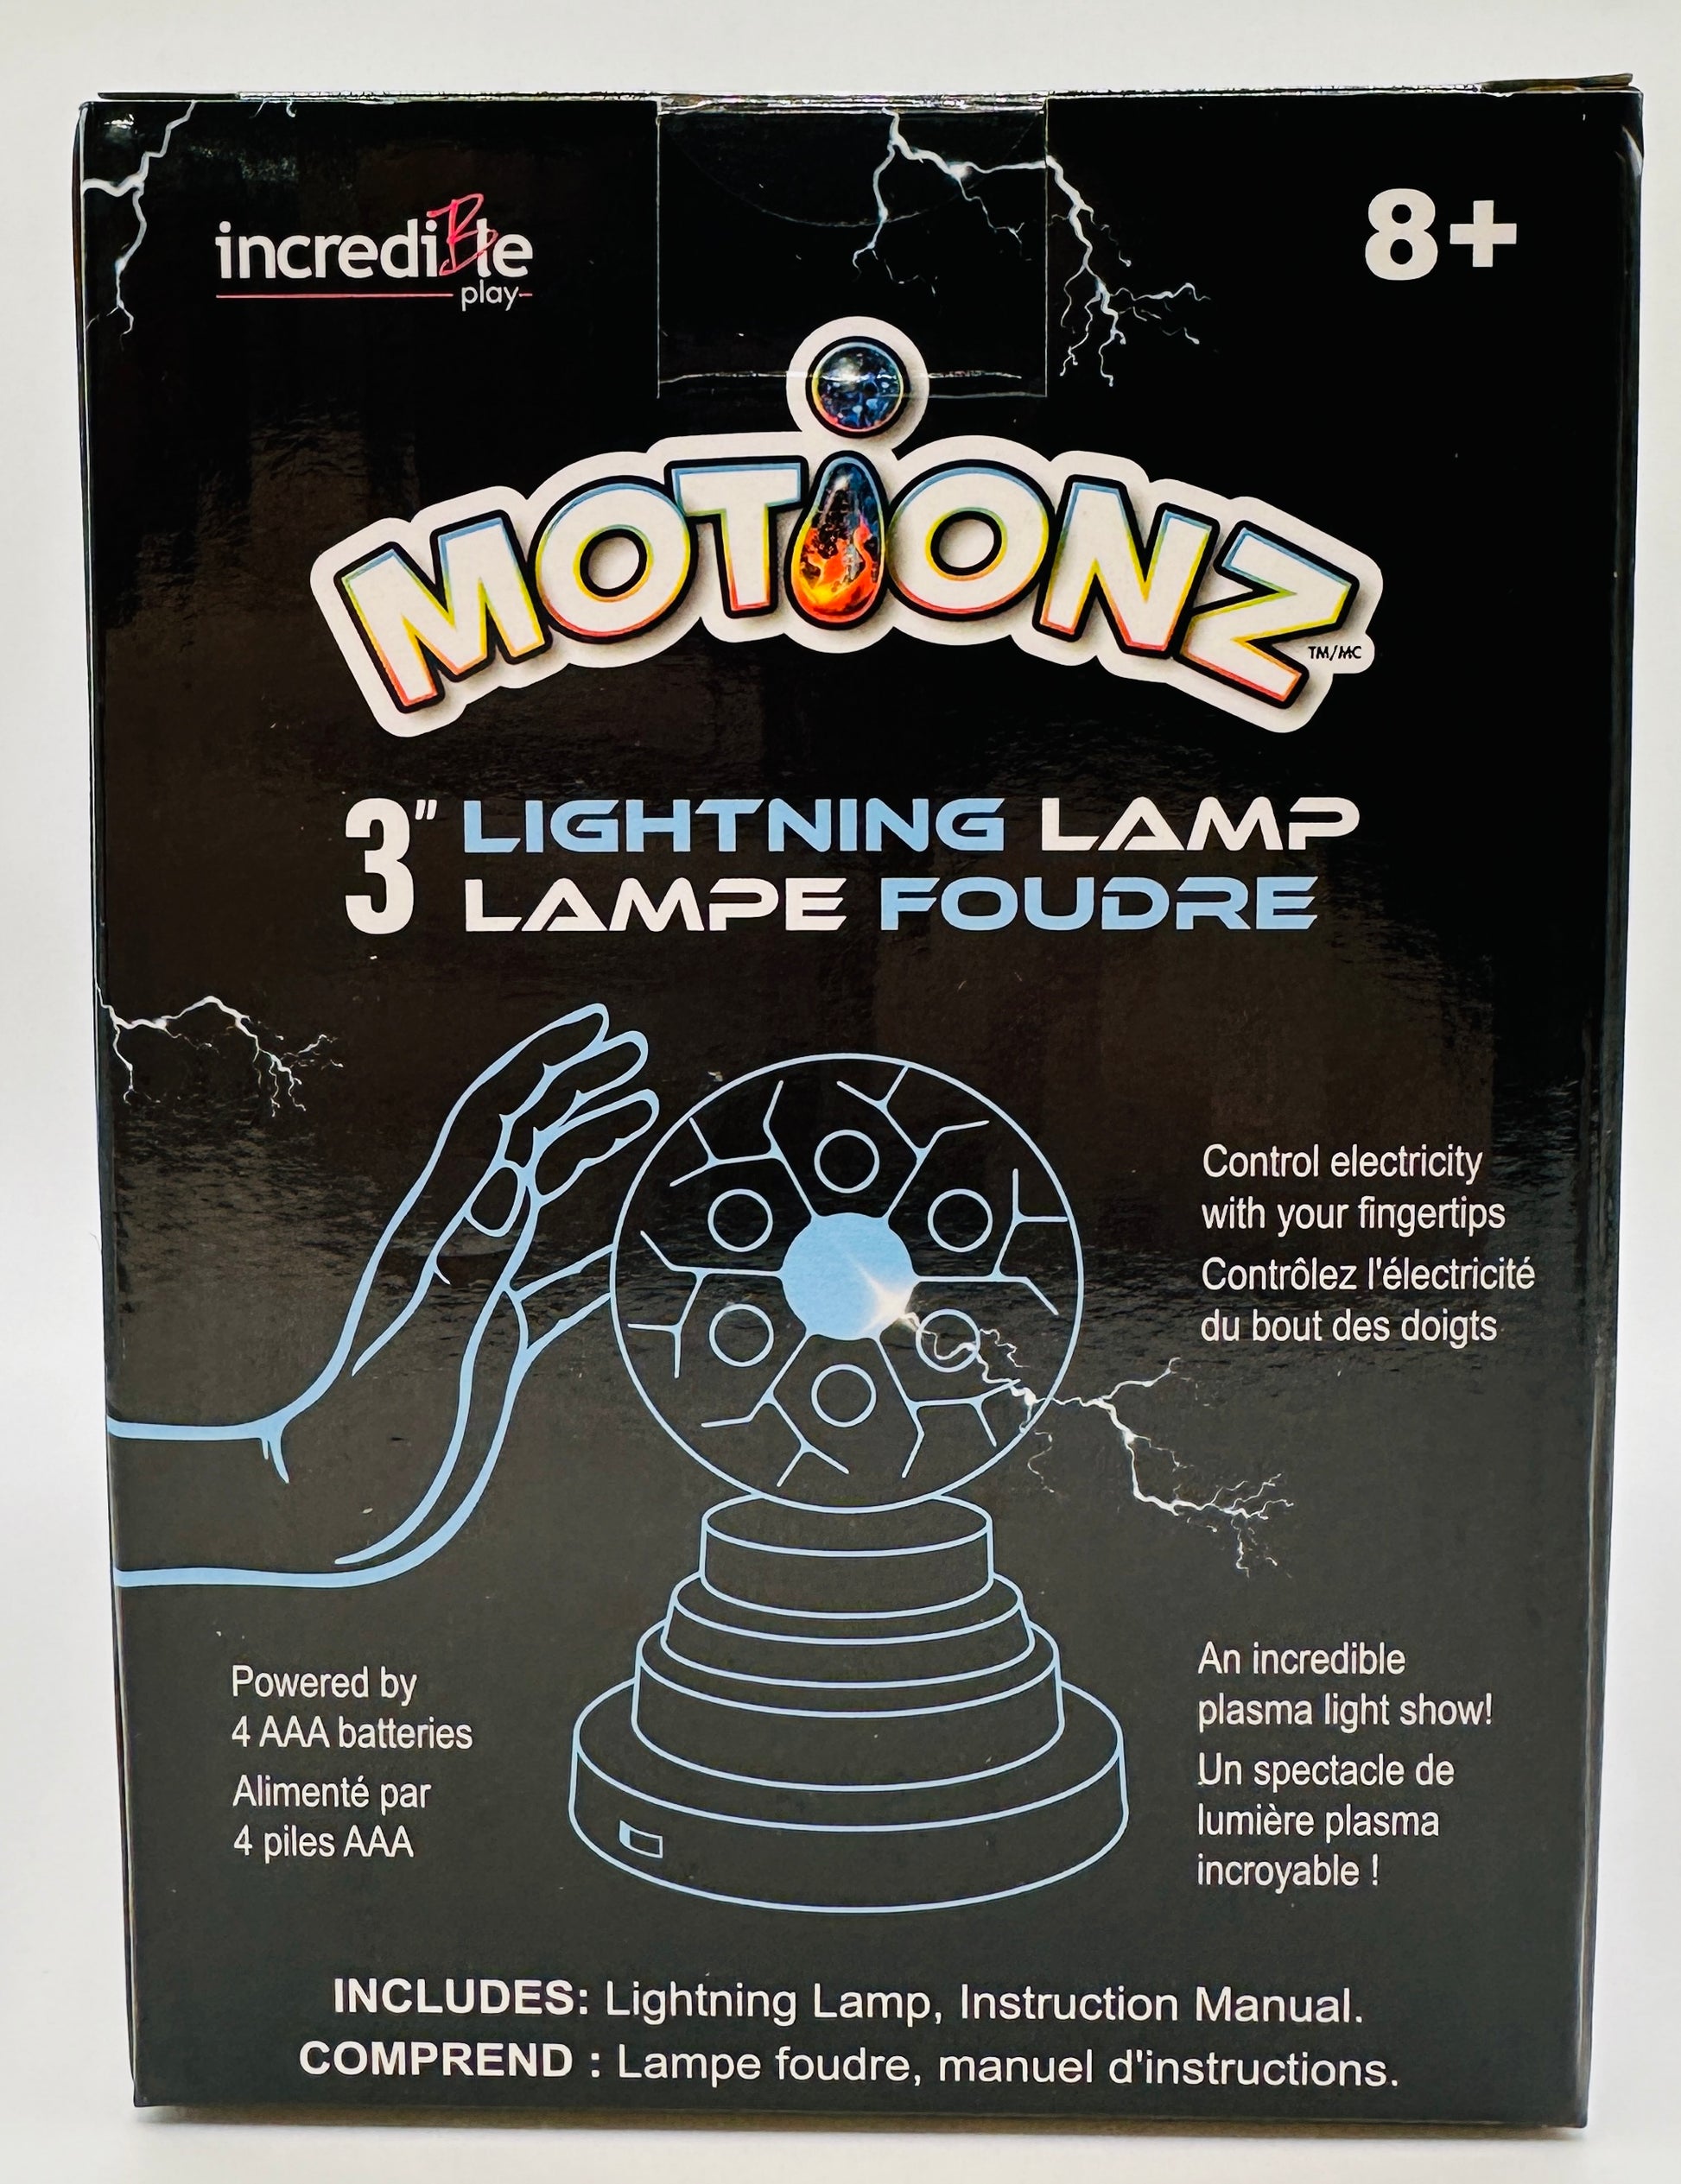 3" Lightning Plasma Lamp